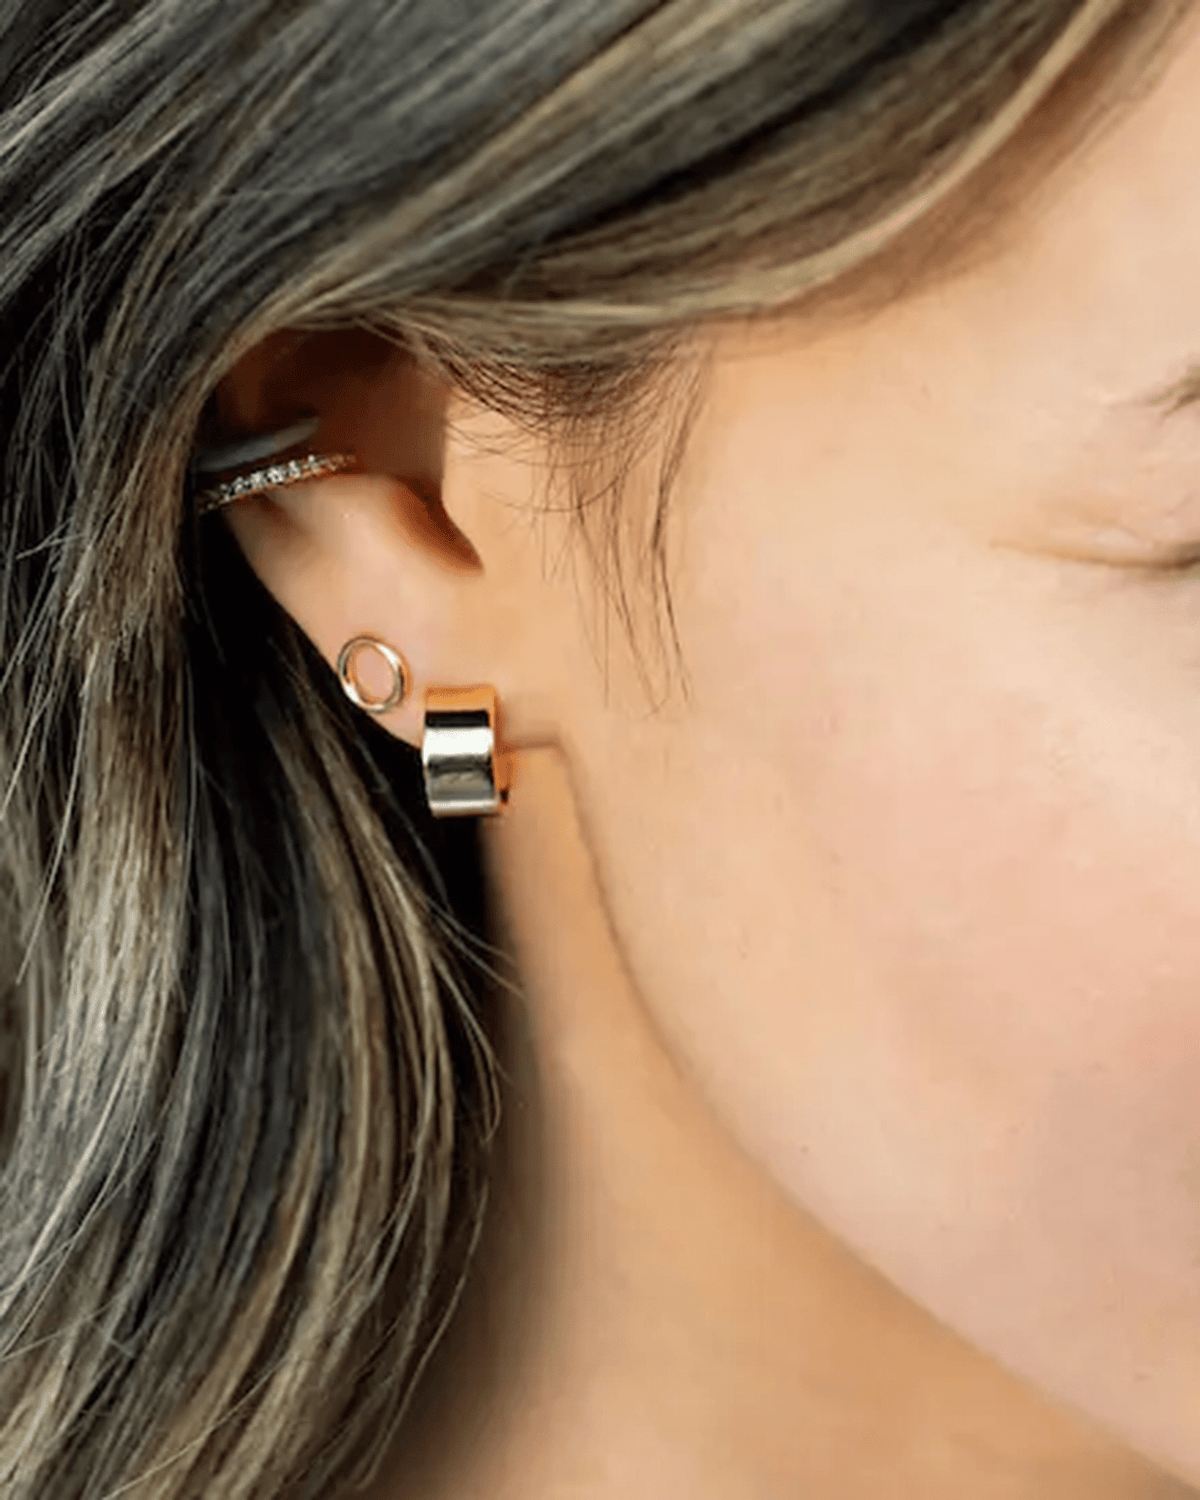 Kris Nations Jewelry 18K Gold Vermeil Circle Outline Stud Earrings in 18K Gold